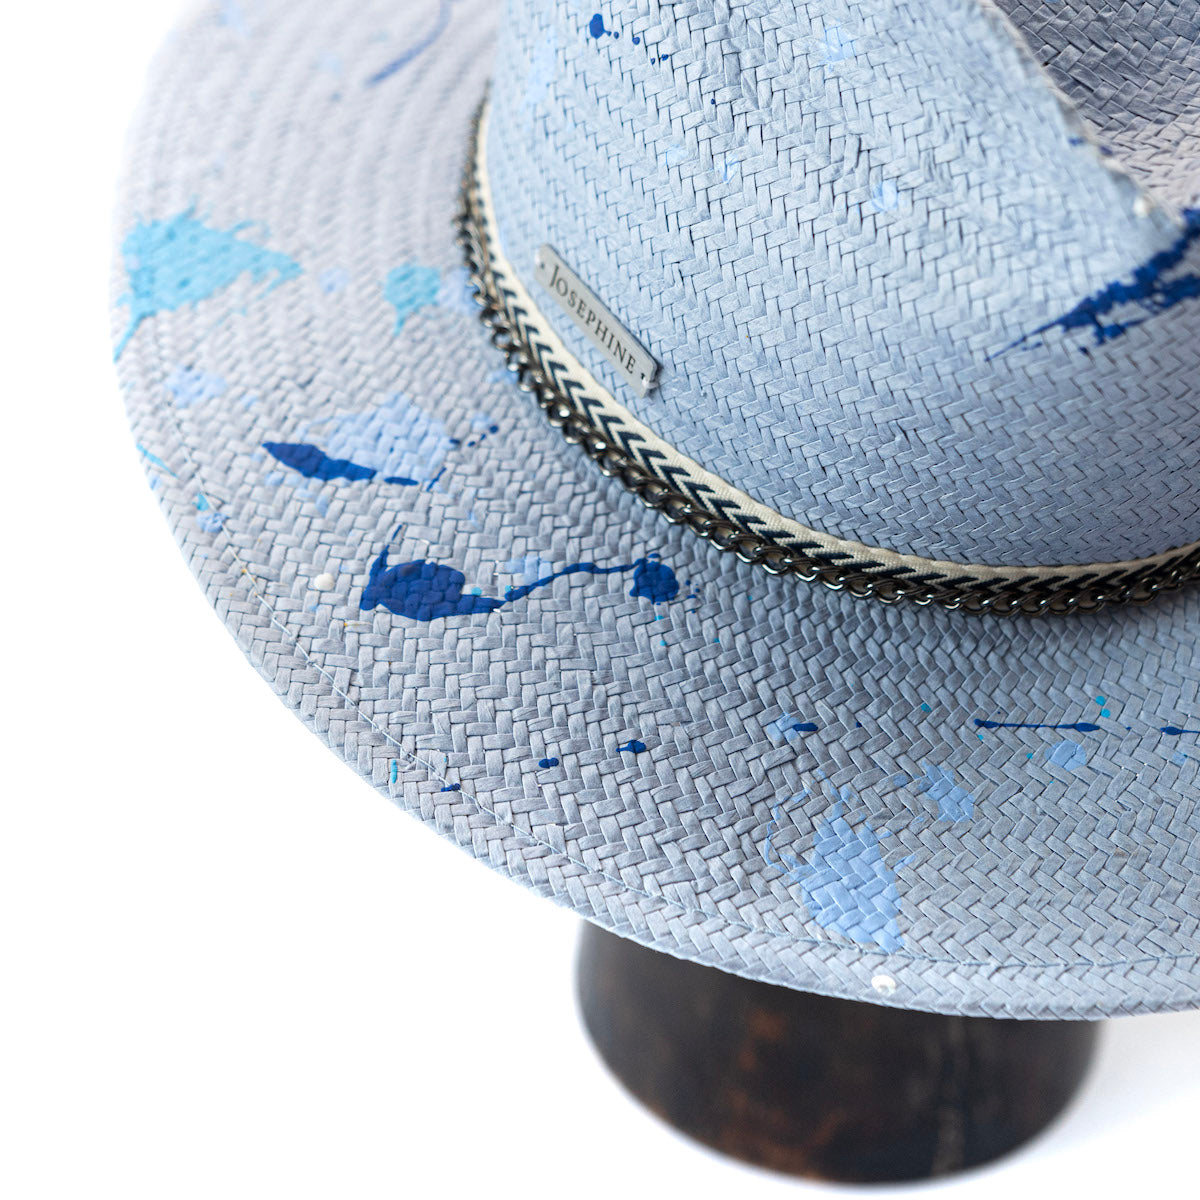 Urban style summer hat "Mery in Blue"